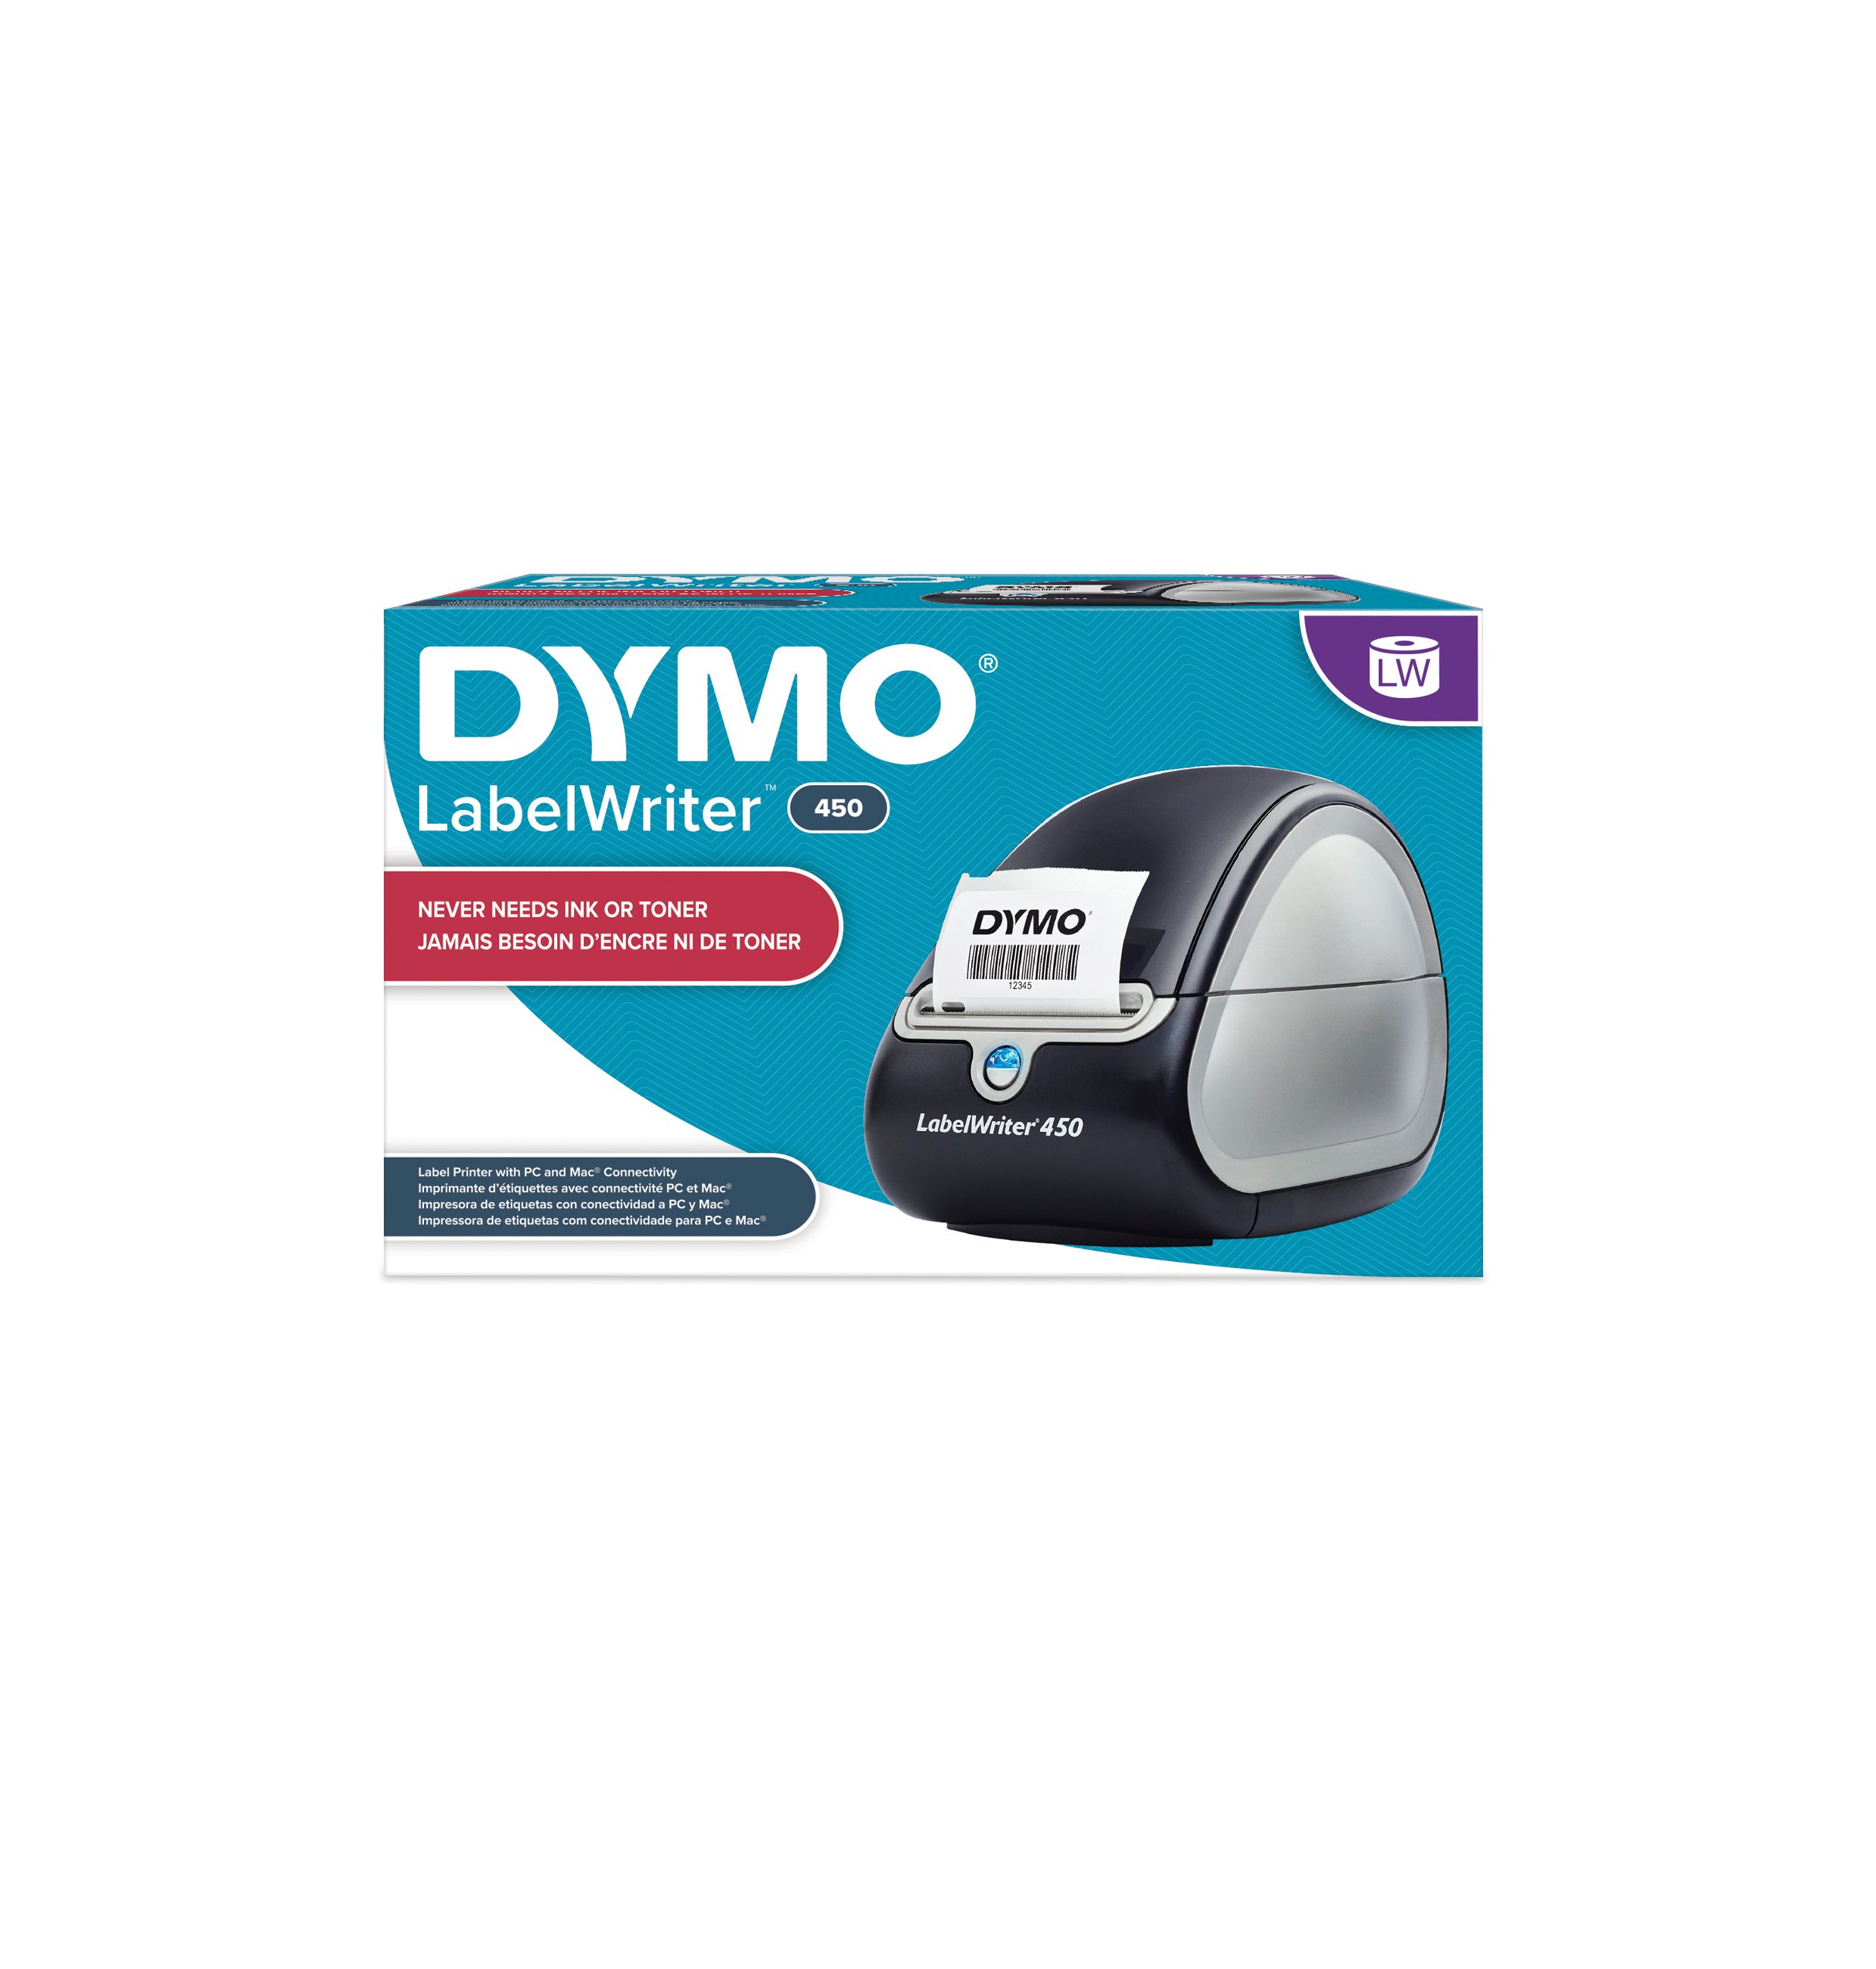  Dymo LabelWriter 450 Direct Thermal Printer - Monochrome -  Label Print - 51 lpm Mono - USB : Office Products